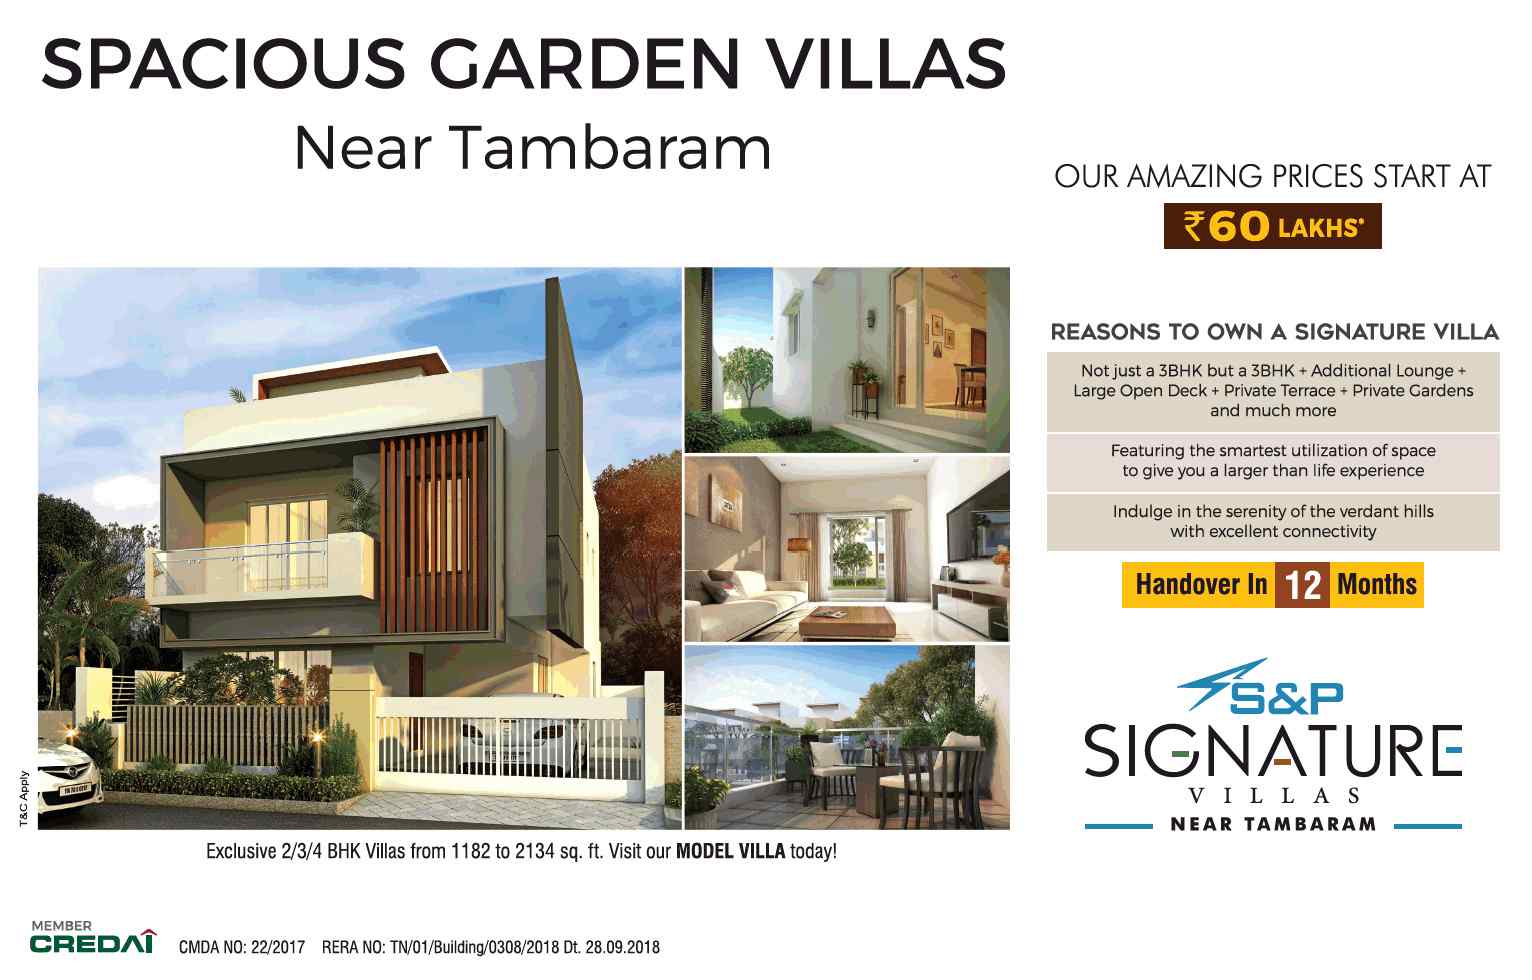 Book spacious garden villas @ Rs 60 Lakhs at S&P Signature Villas in Chennai Update